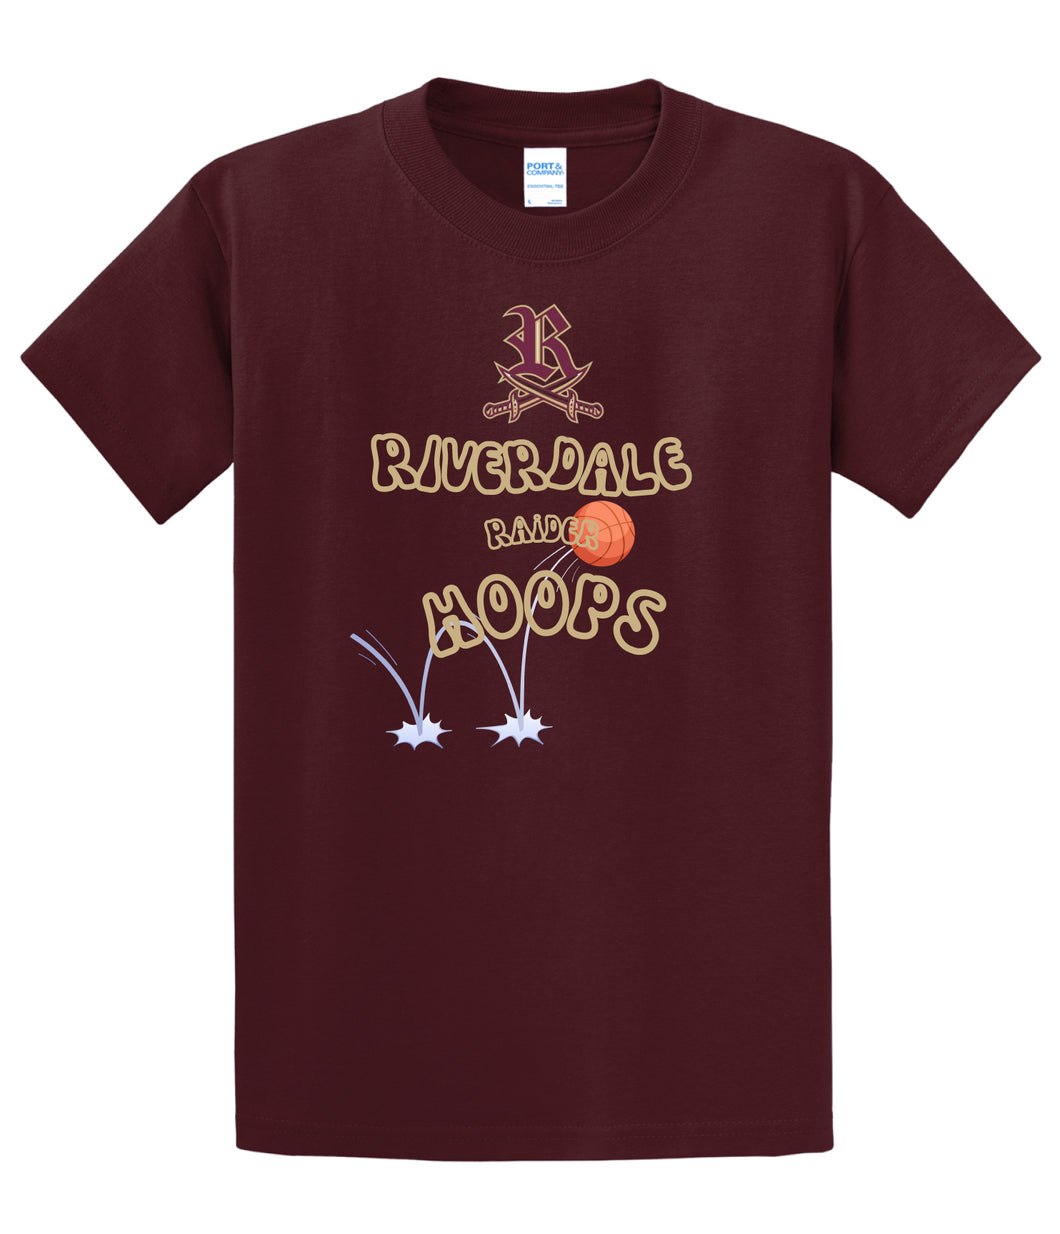 Bounce Hoops Cotton T-shirt